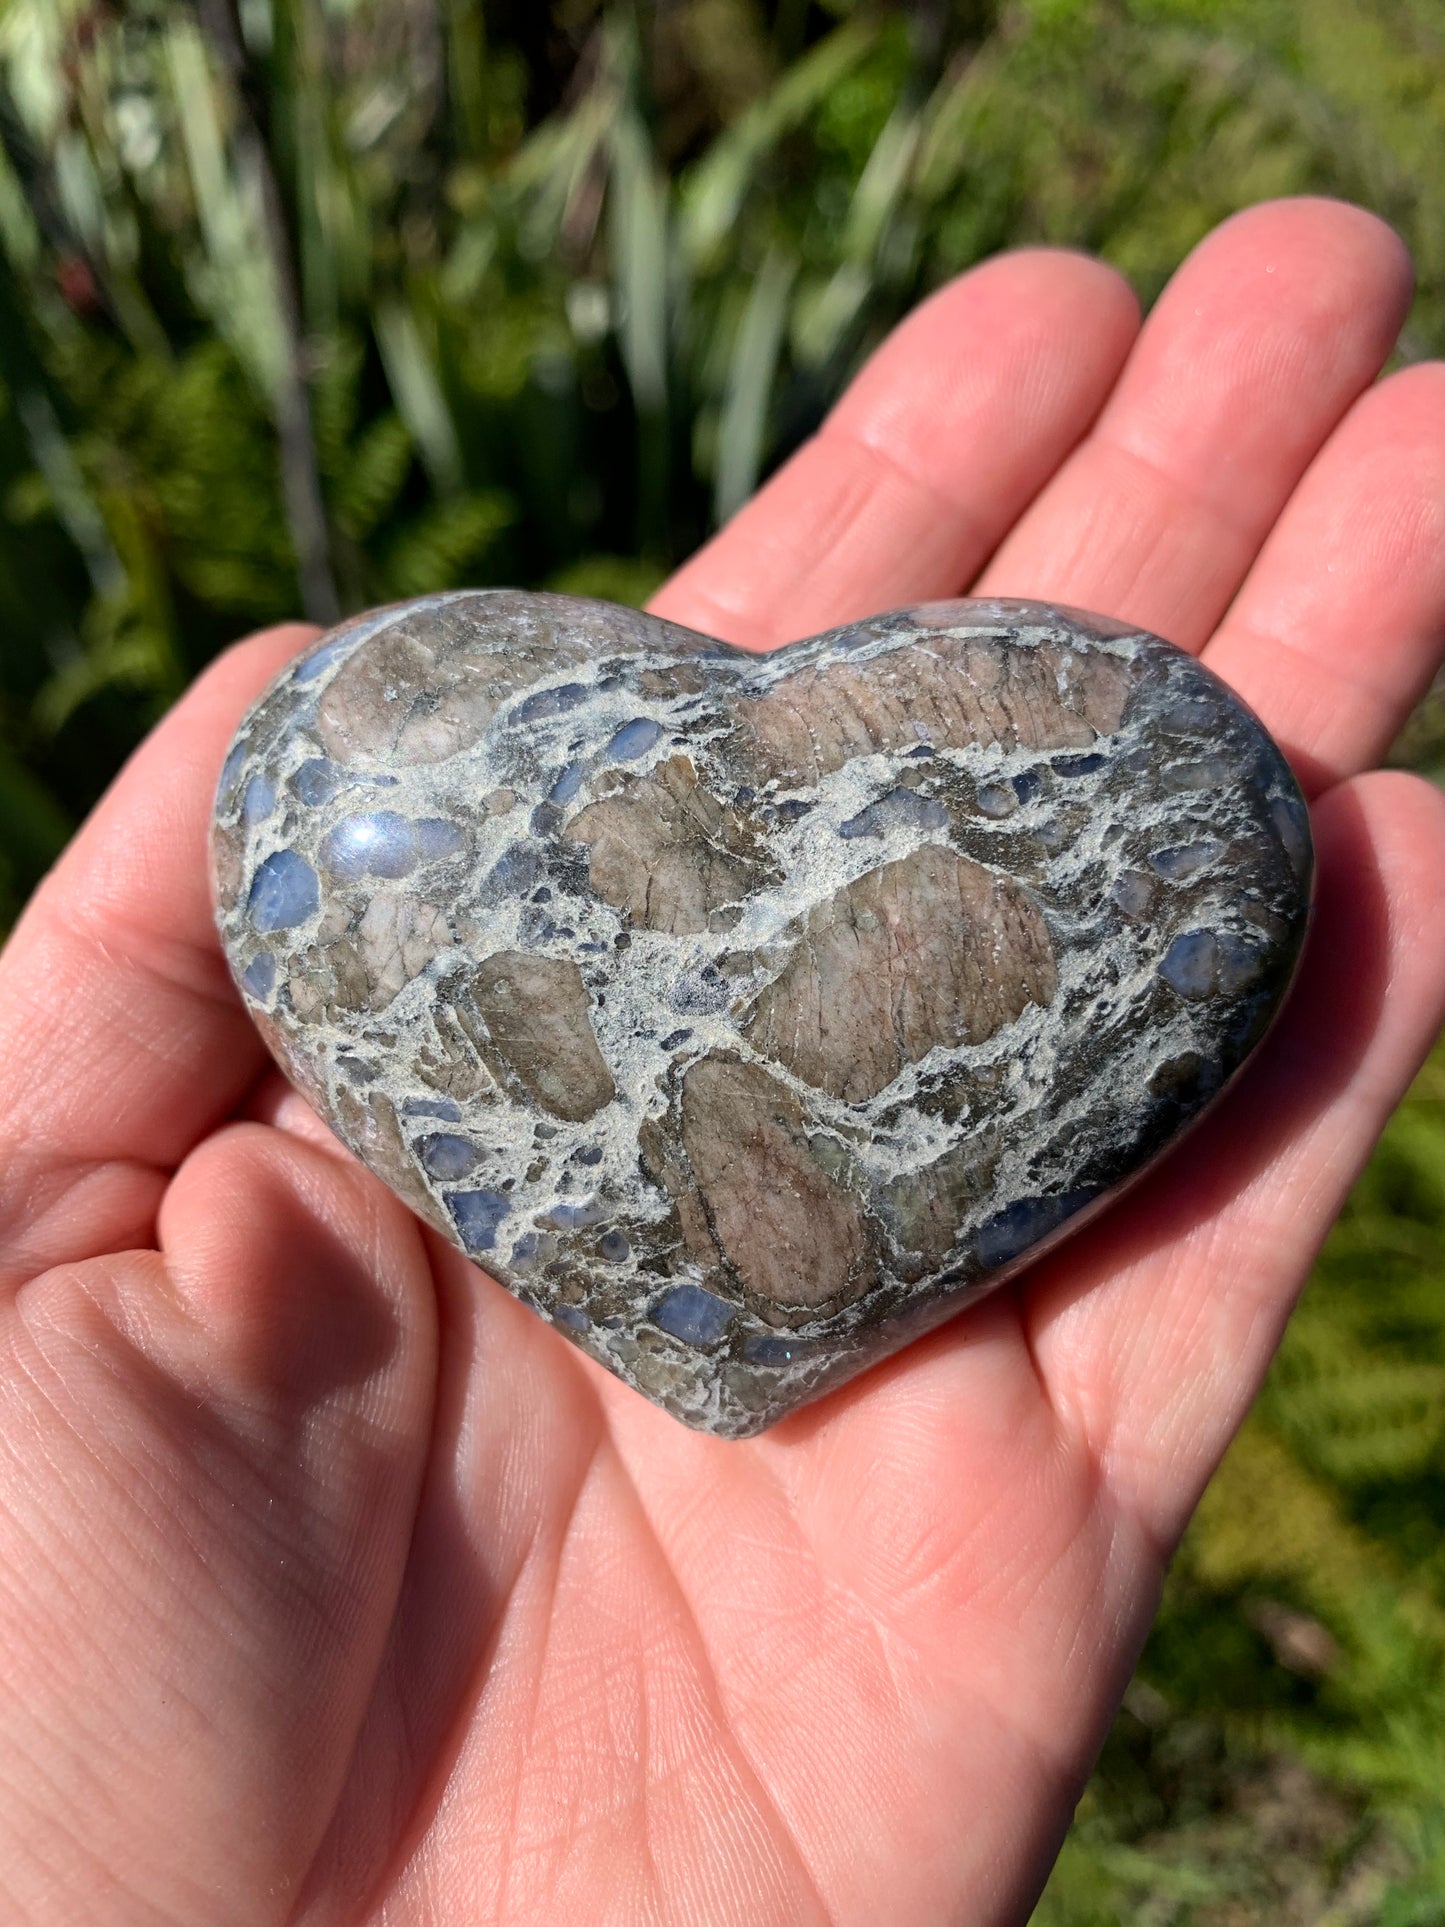 Llianite/Que Sera Stone Heart